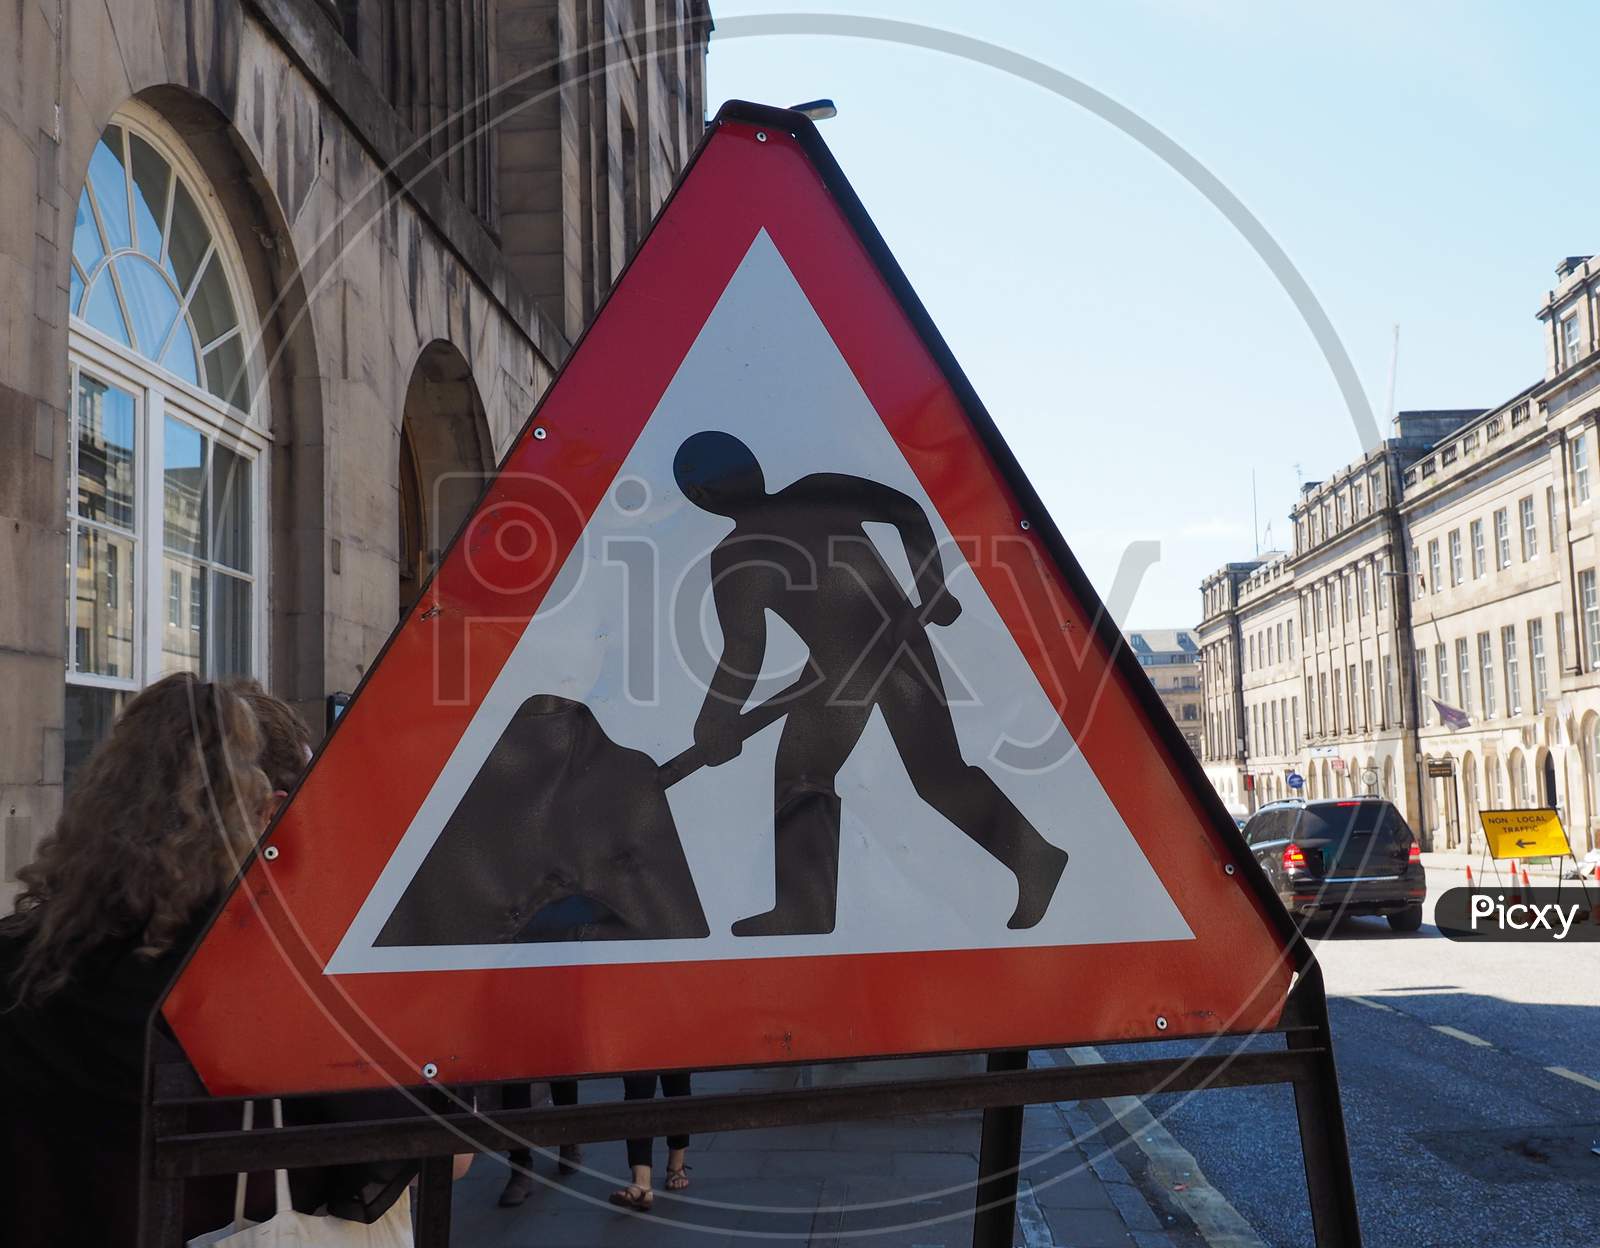 Road Works In Progress Sign